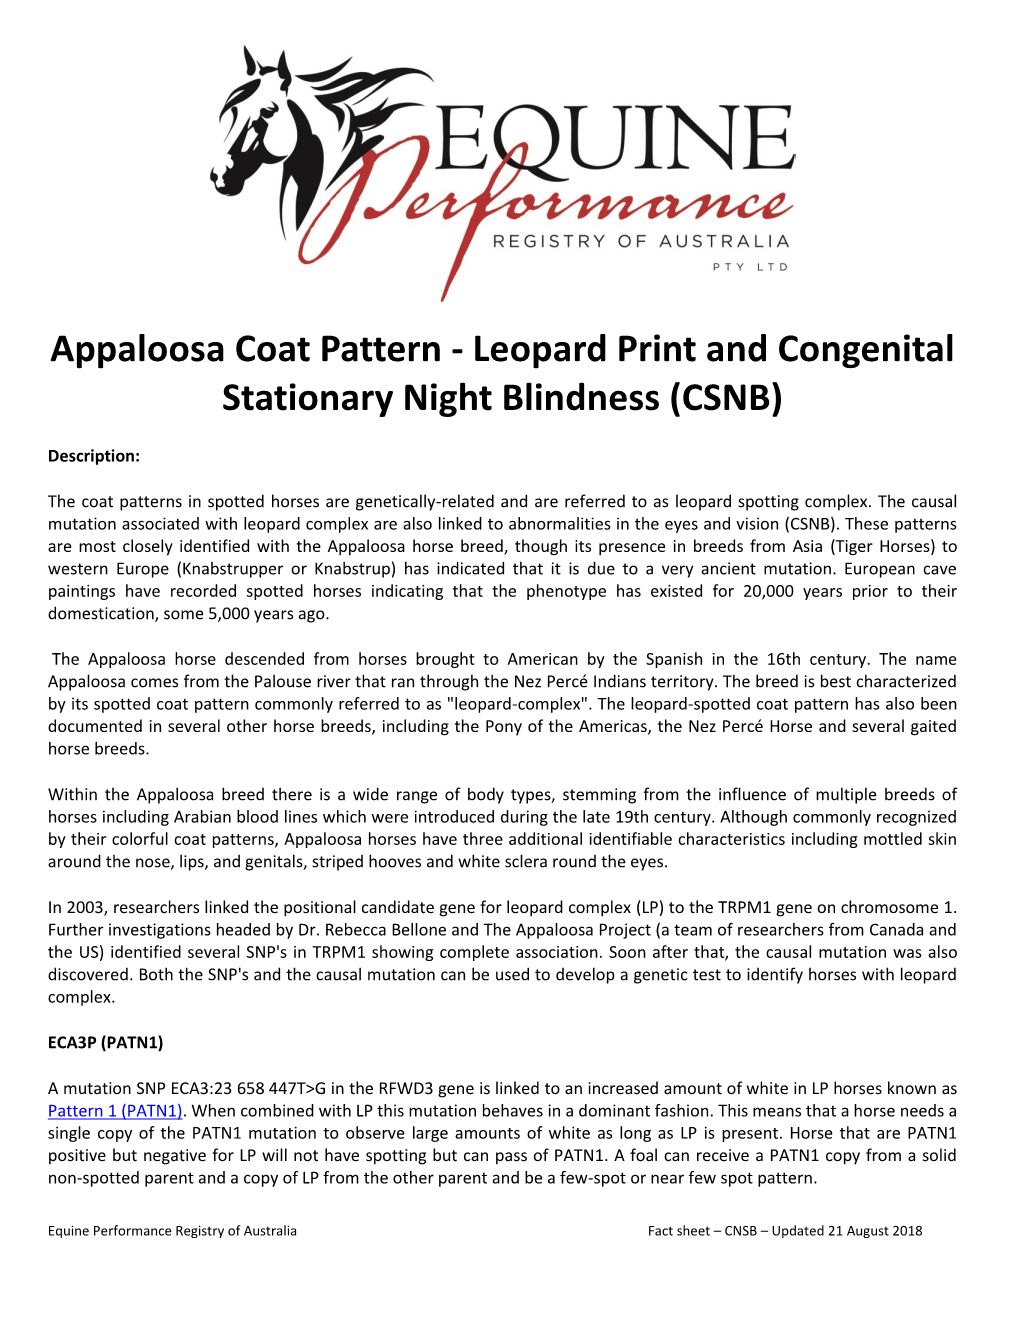 Appaloosa Coat Pattern - Leopard Print and Congenital Stationary Night Blindness (CSNB)